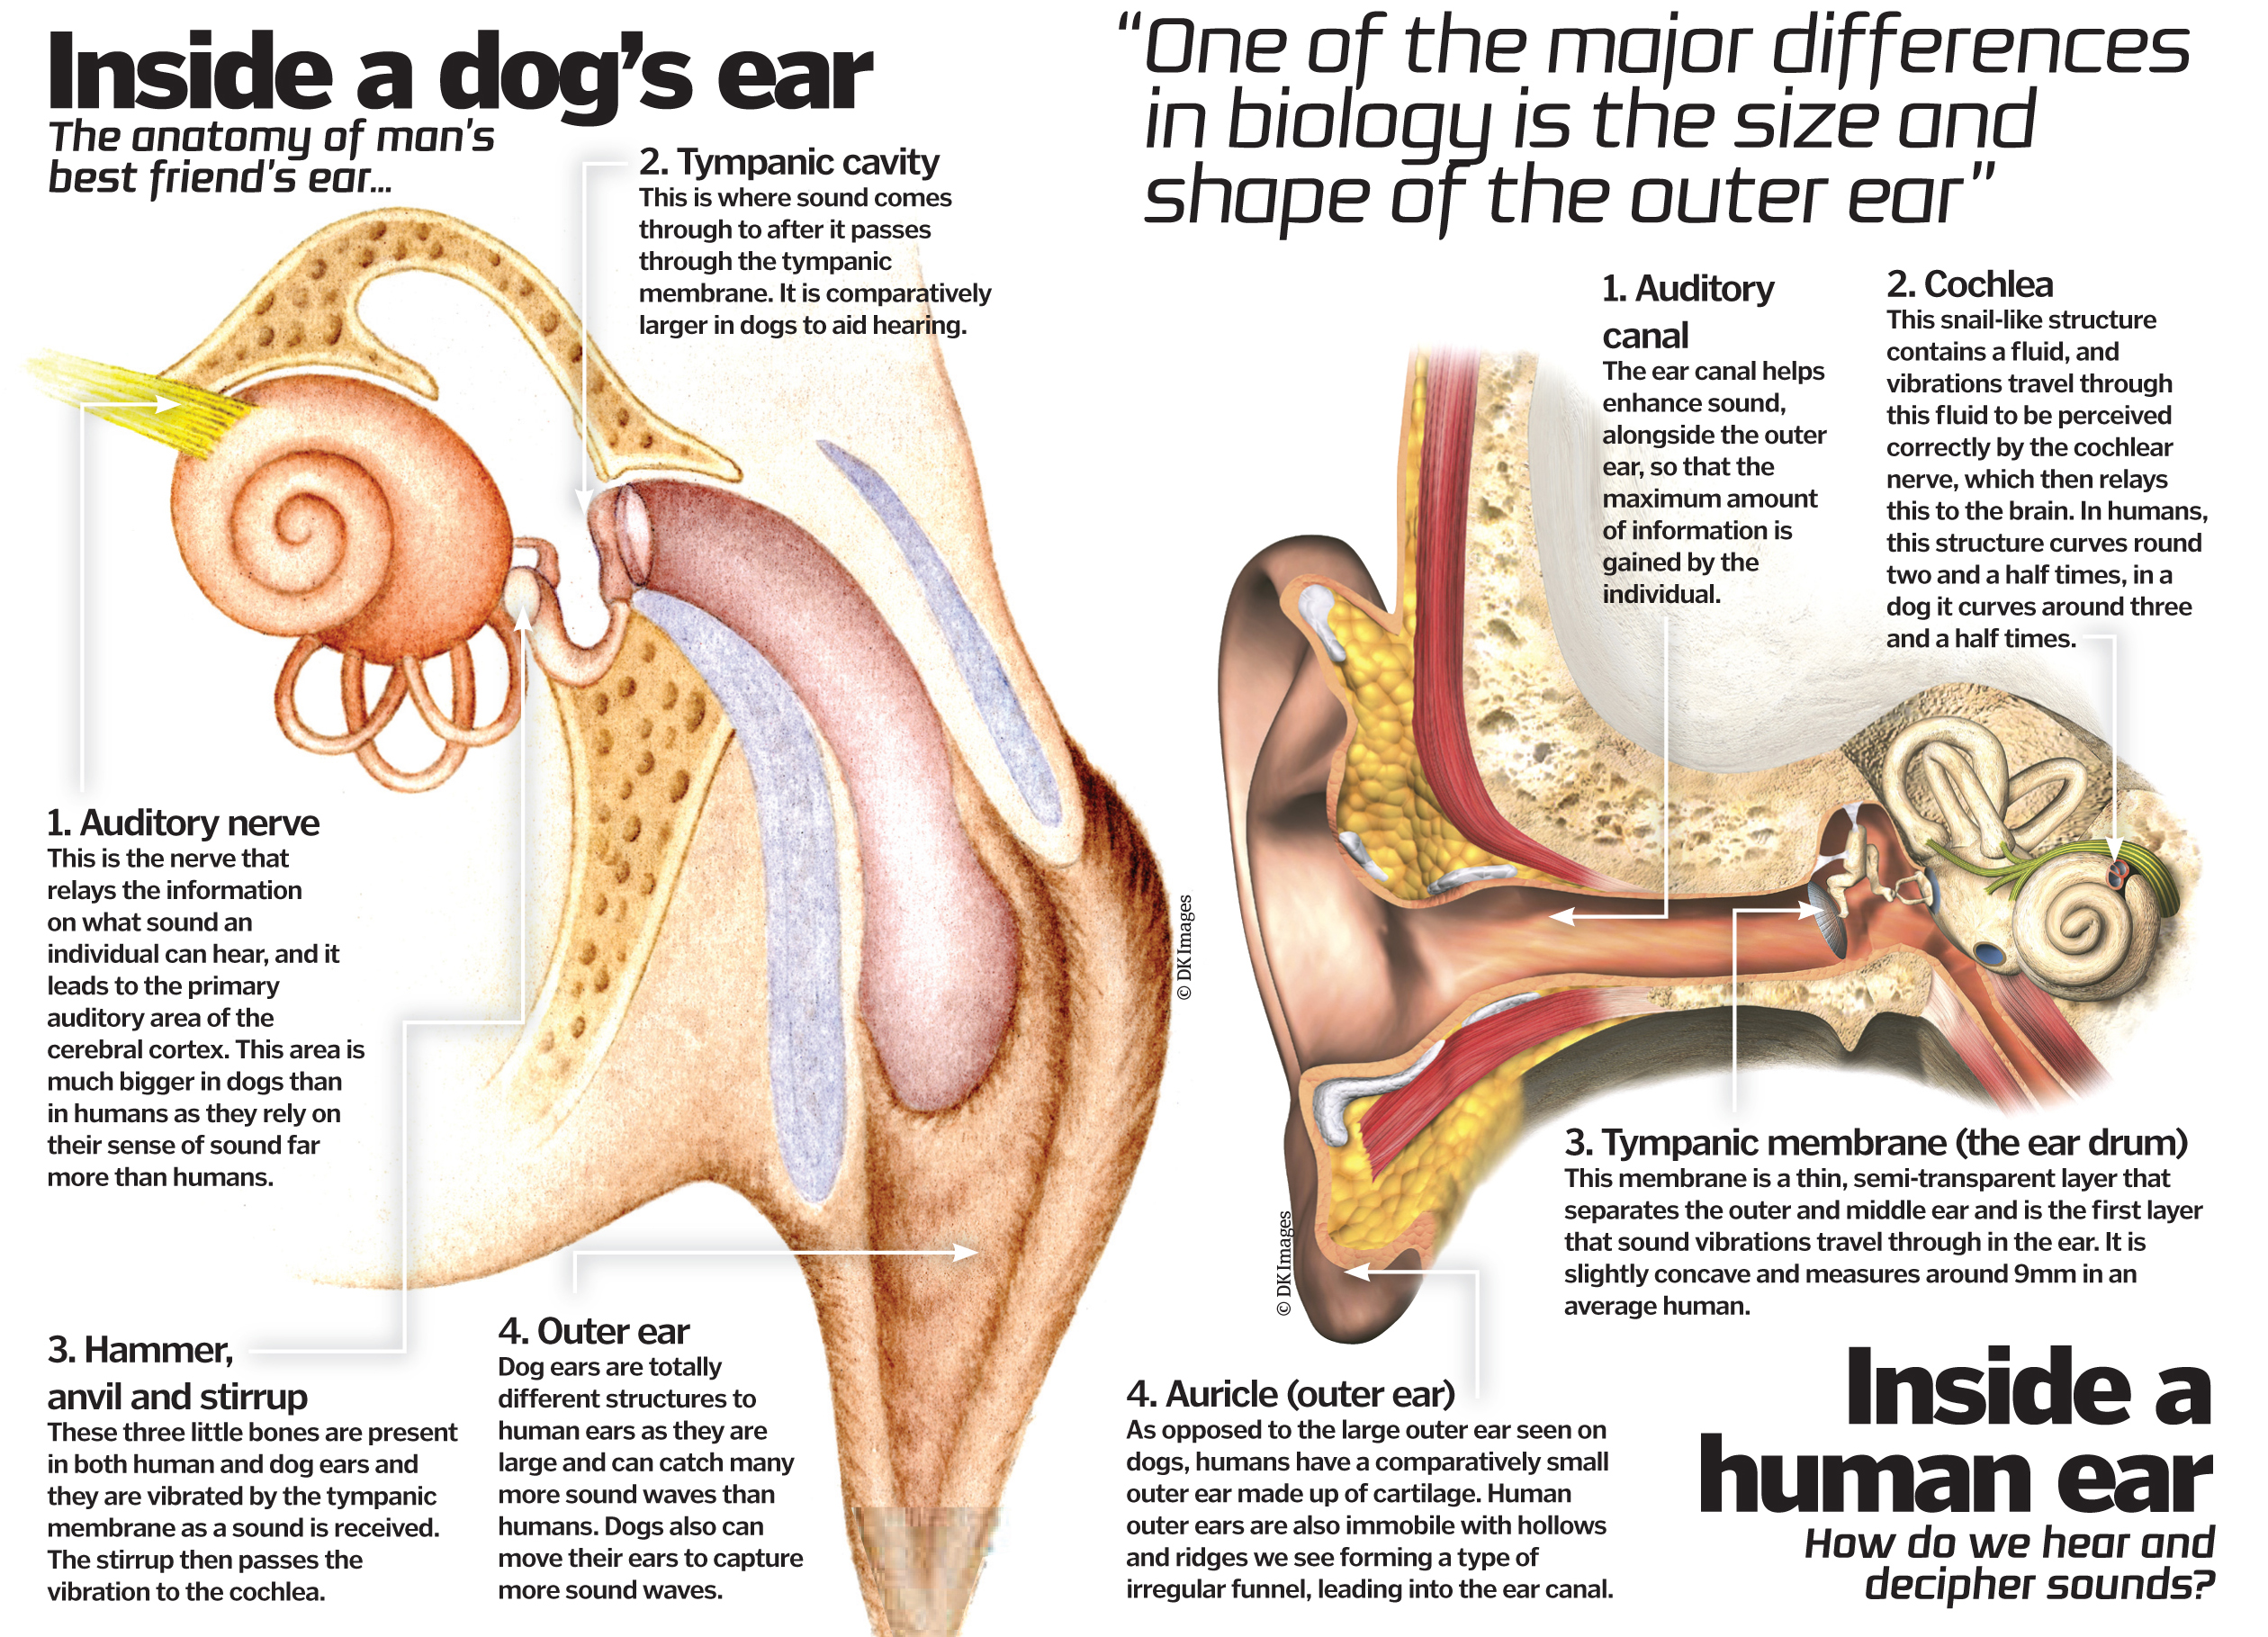 How do dogs hear better than humans?